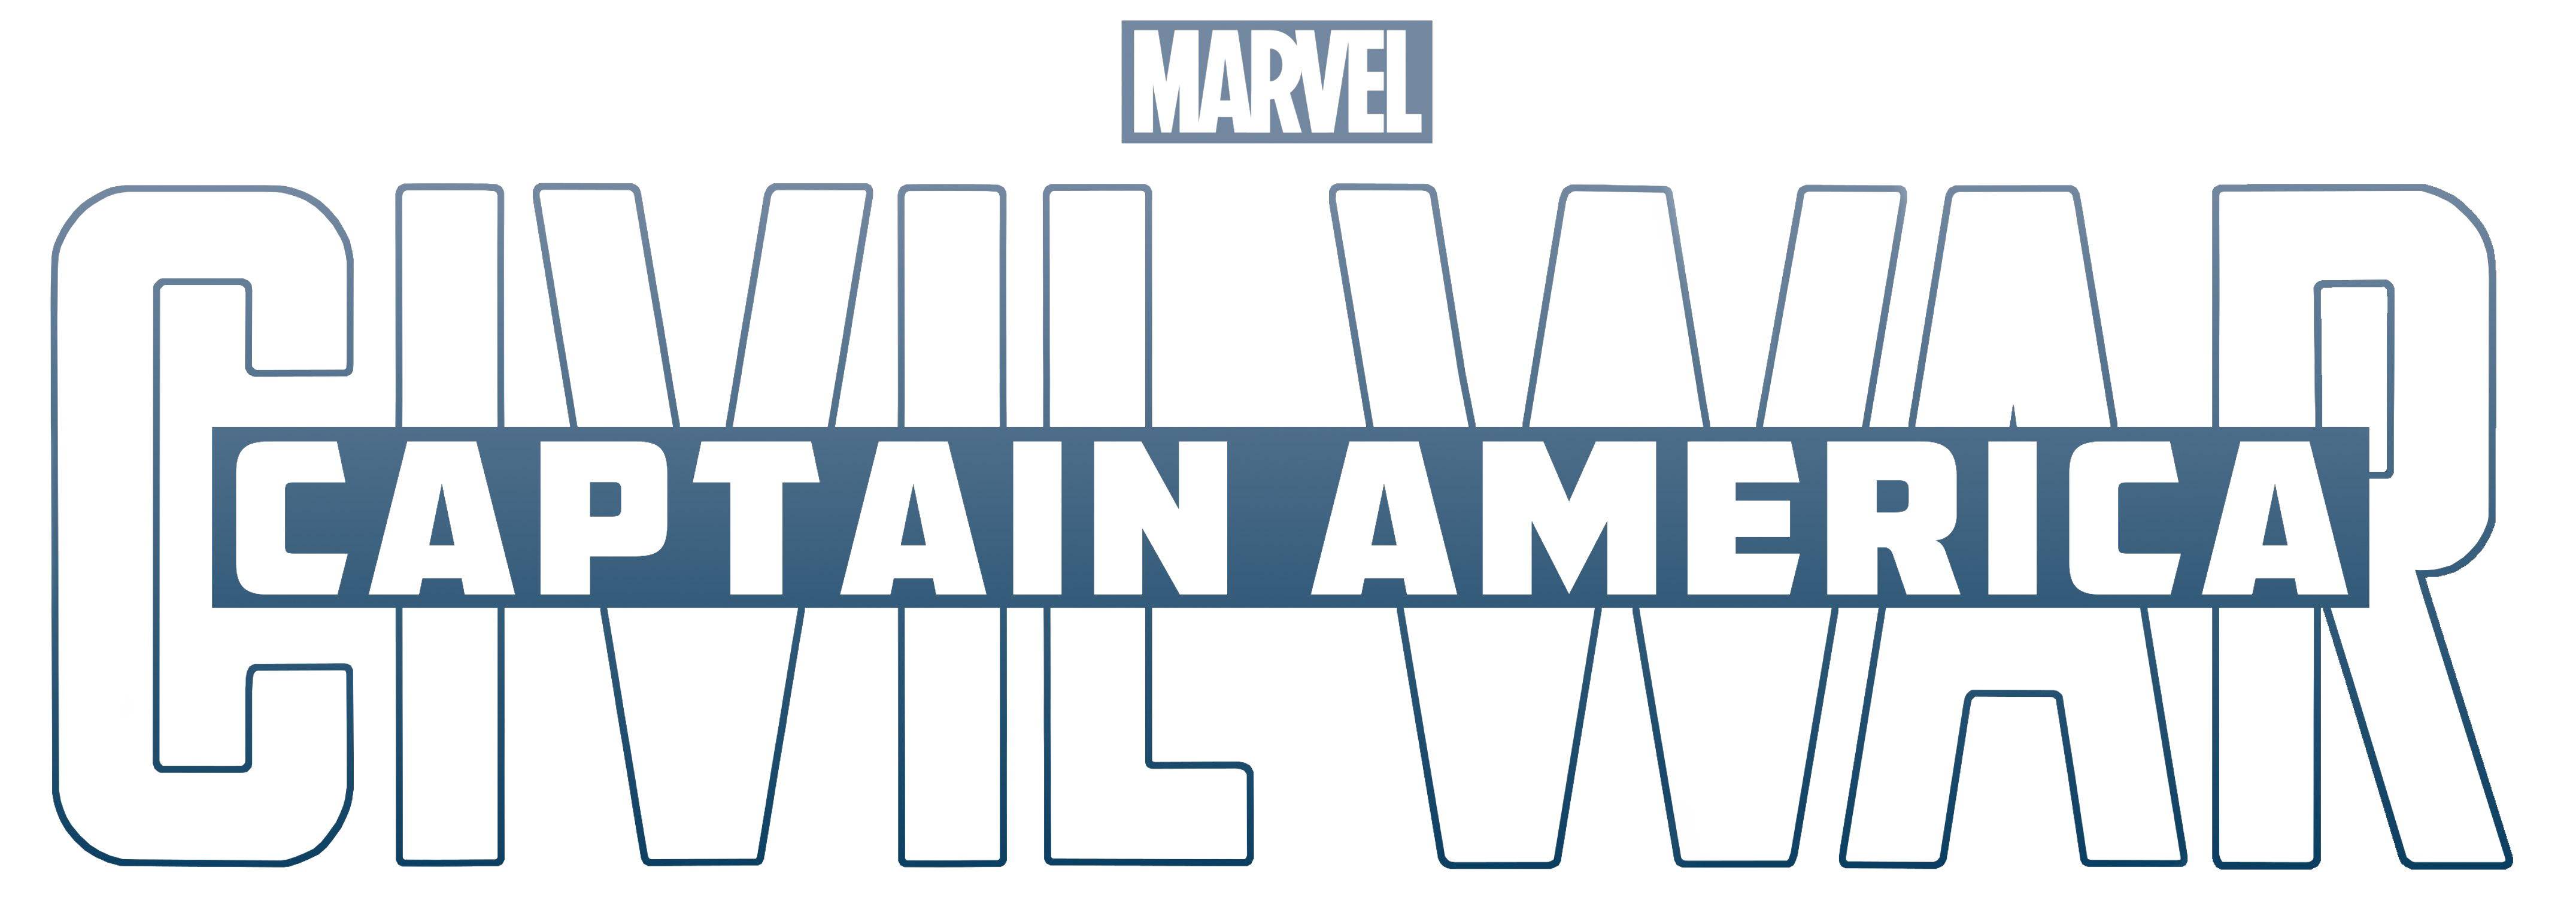 Marvel Capitaine America Guerre civile